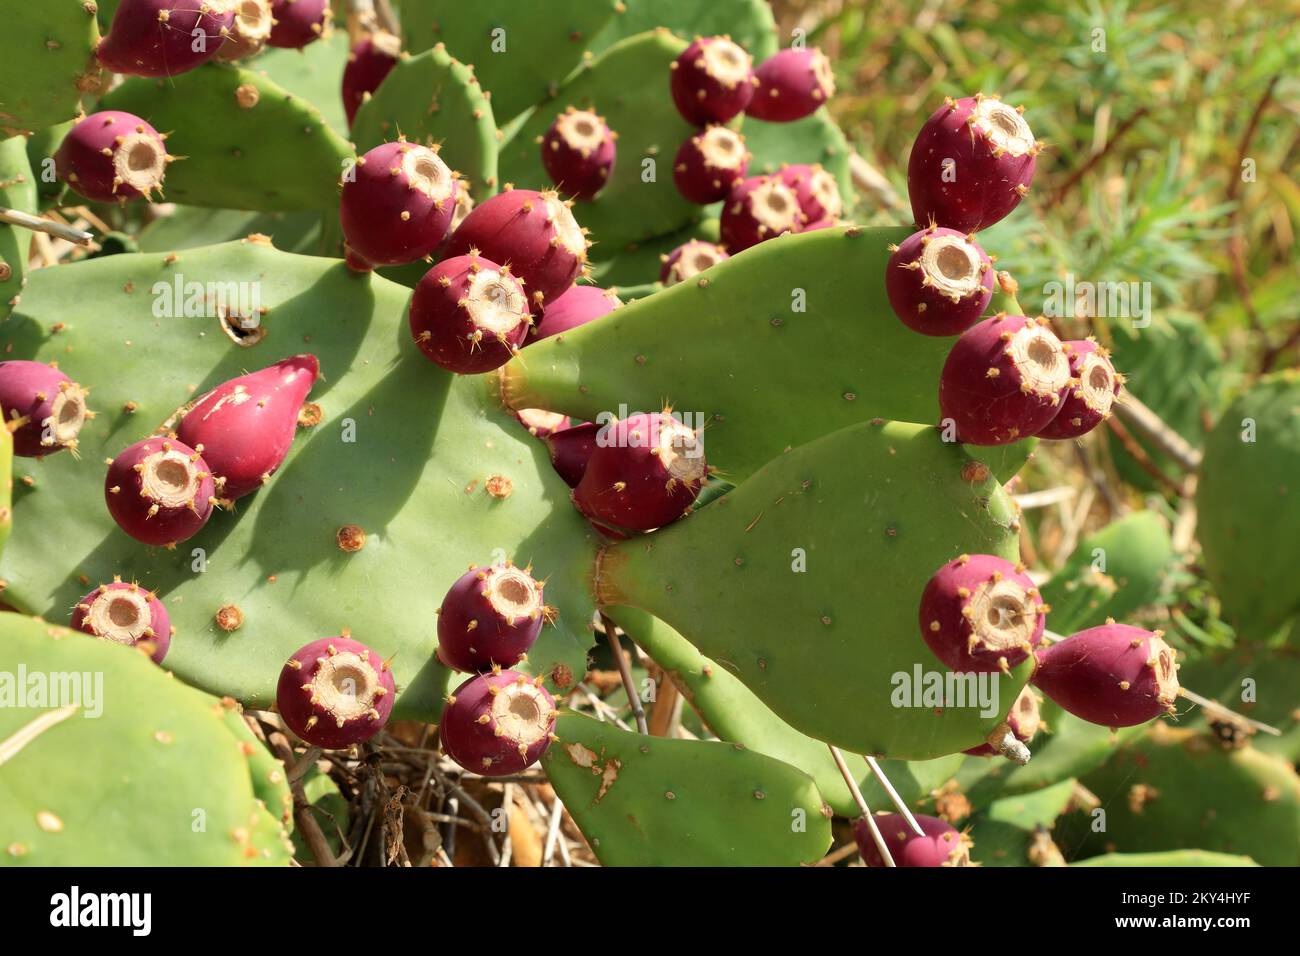 Cactus de pera espinosa con frutos, Opuntia ficus-indica, Opuntia de higo indio, género Opuntia Foto de stock